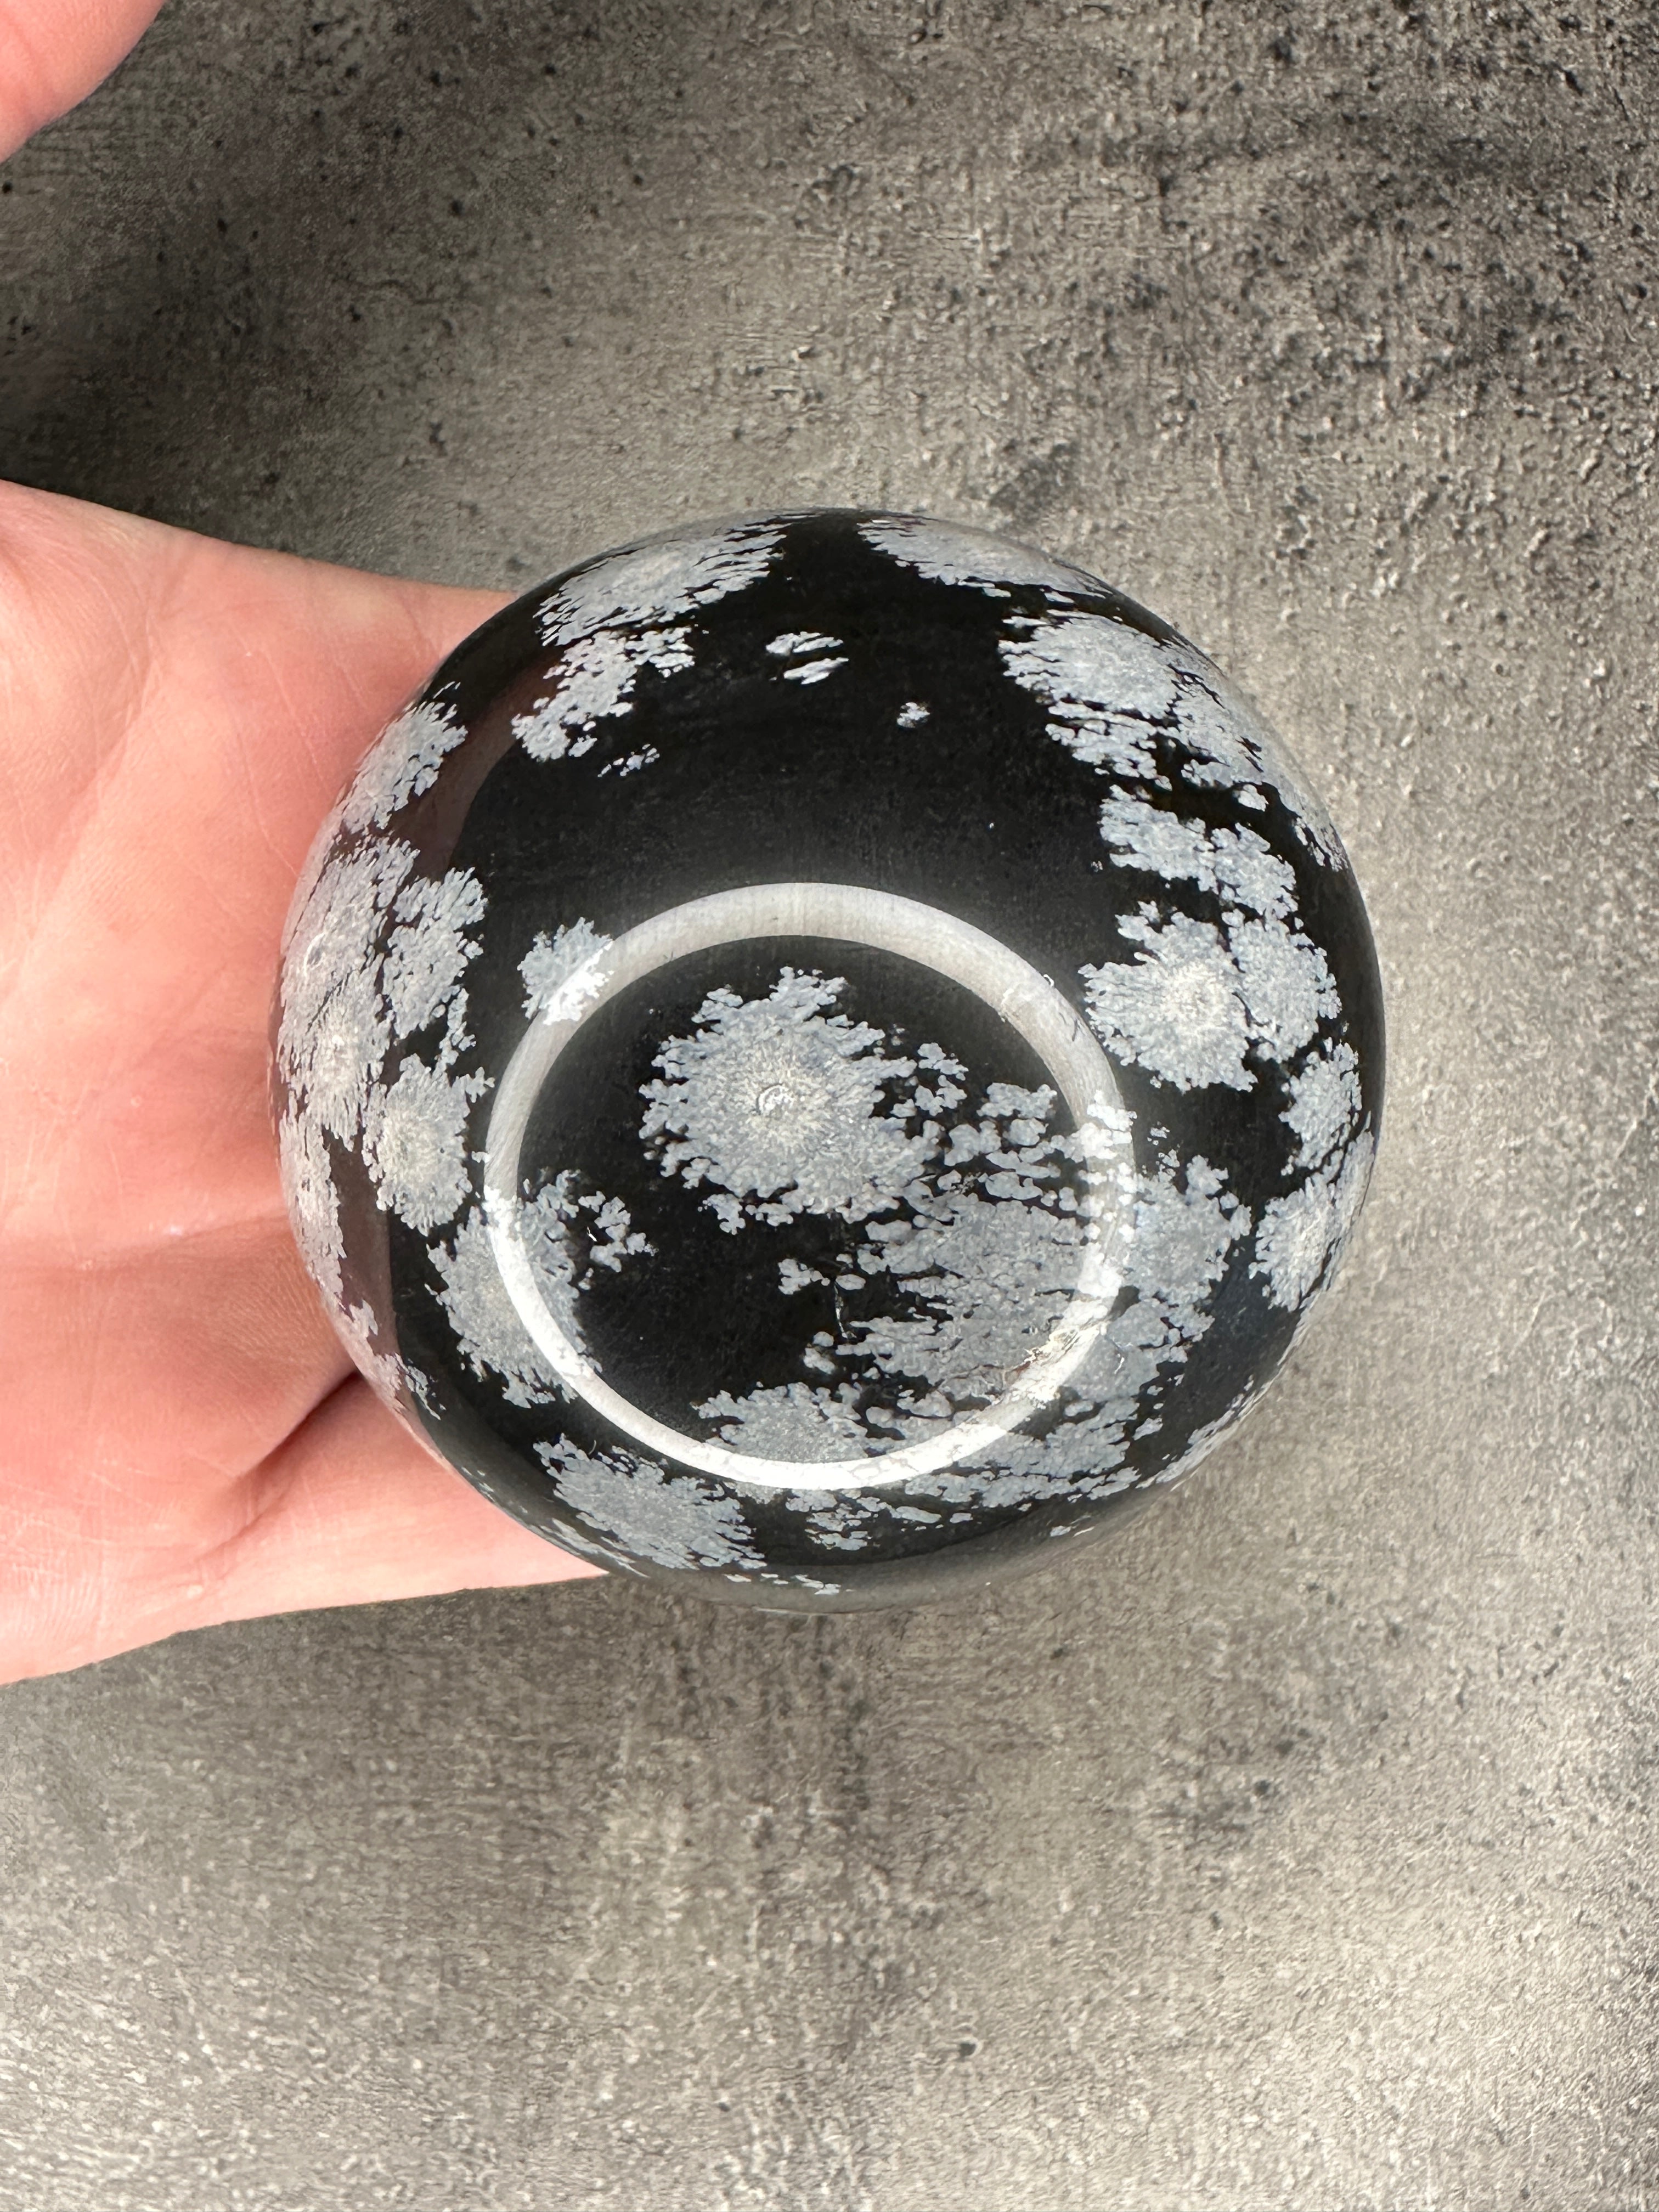 Snowflake obsidian - Large Sphere